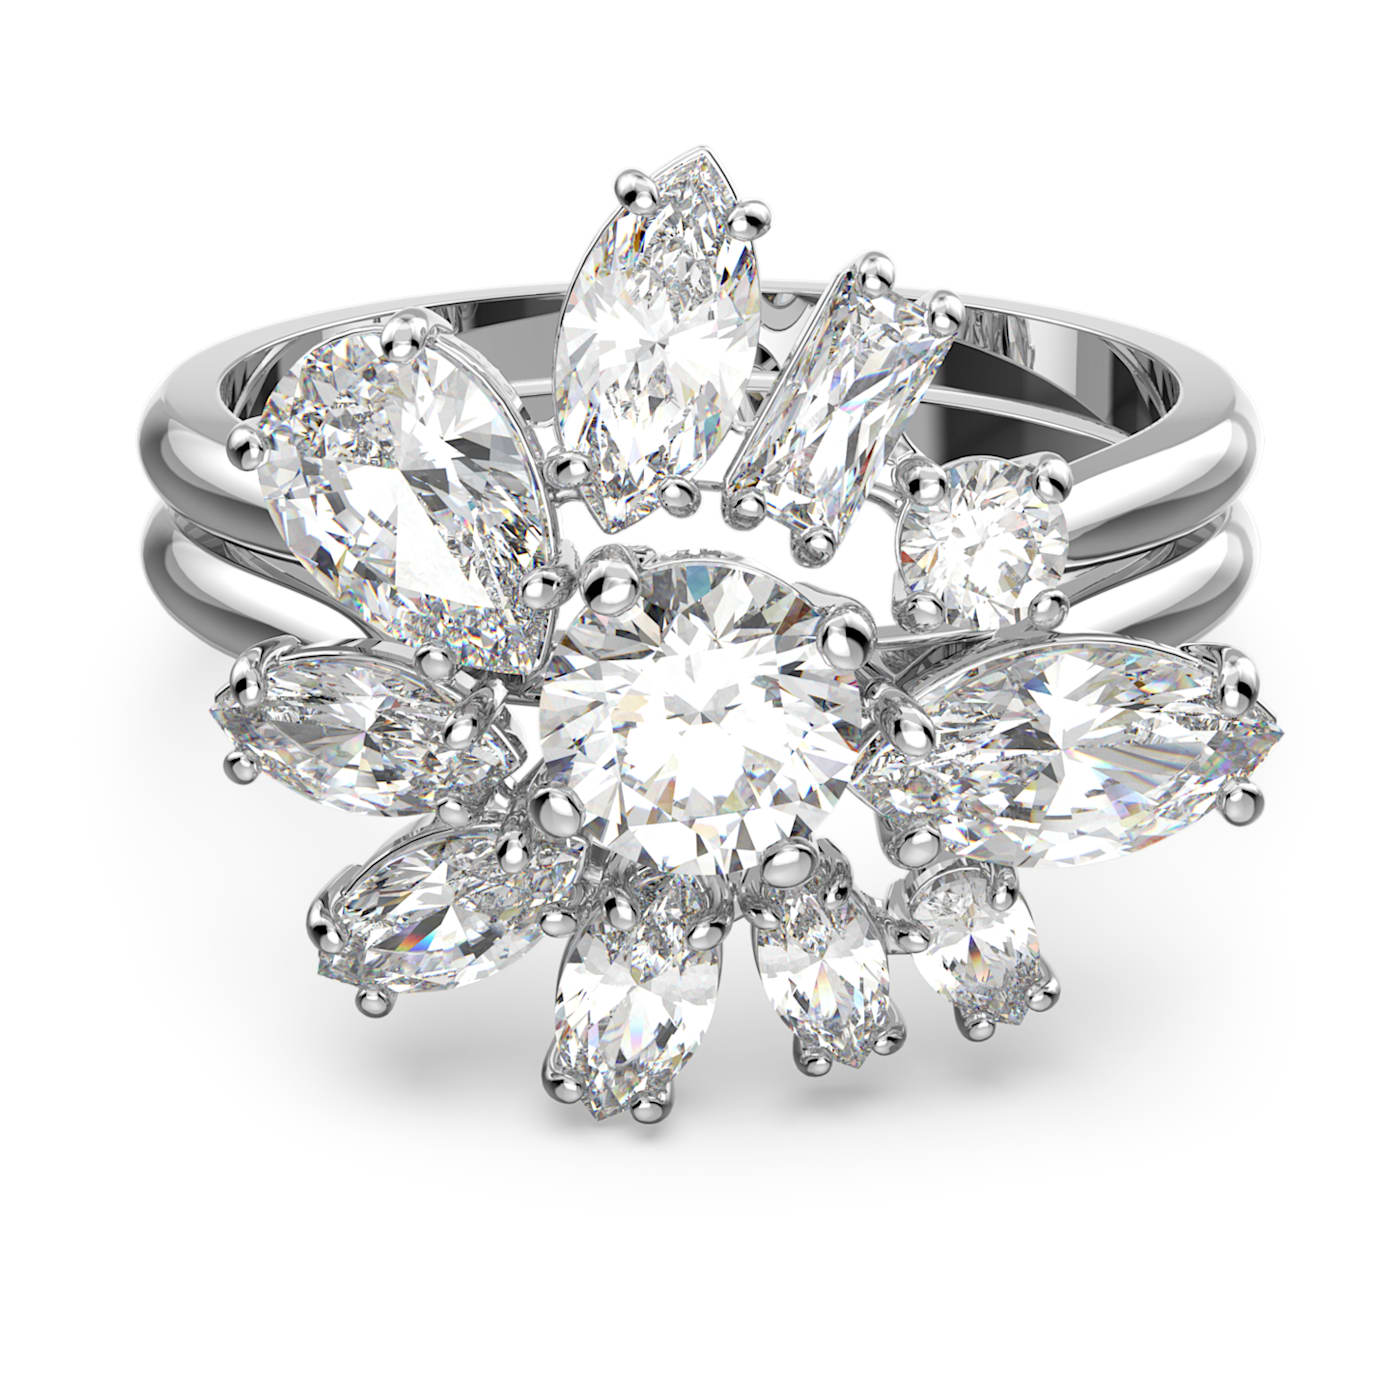 Swarovski Třpytivý prsten s krystaly Gema 564466 50 mm